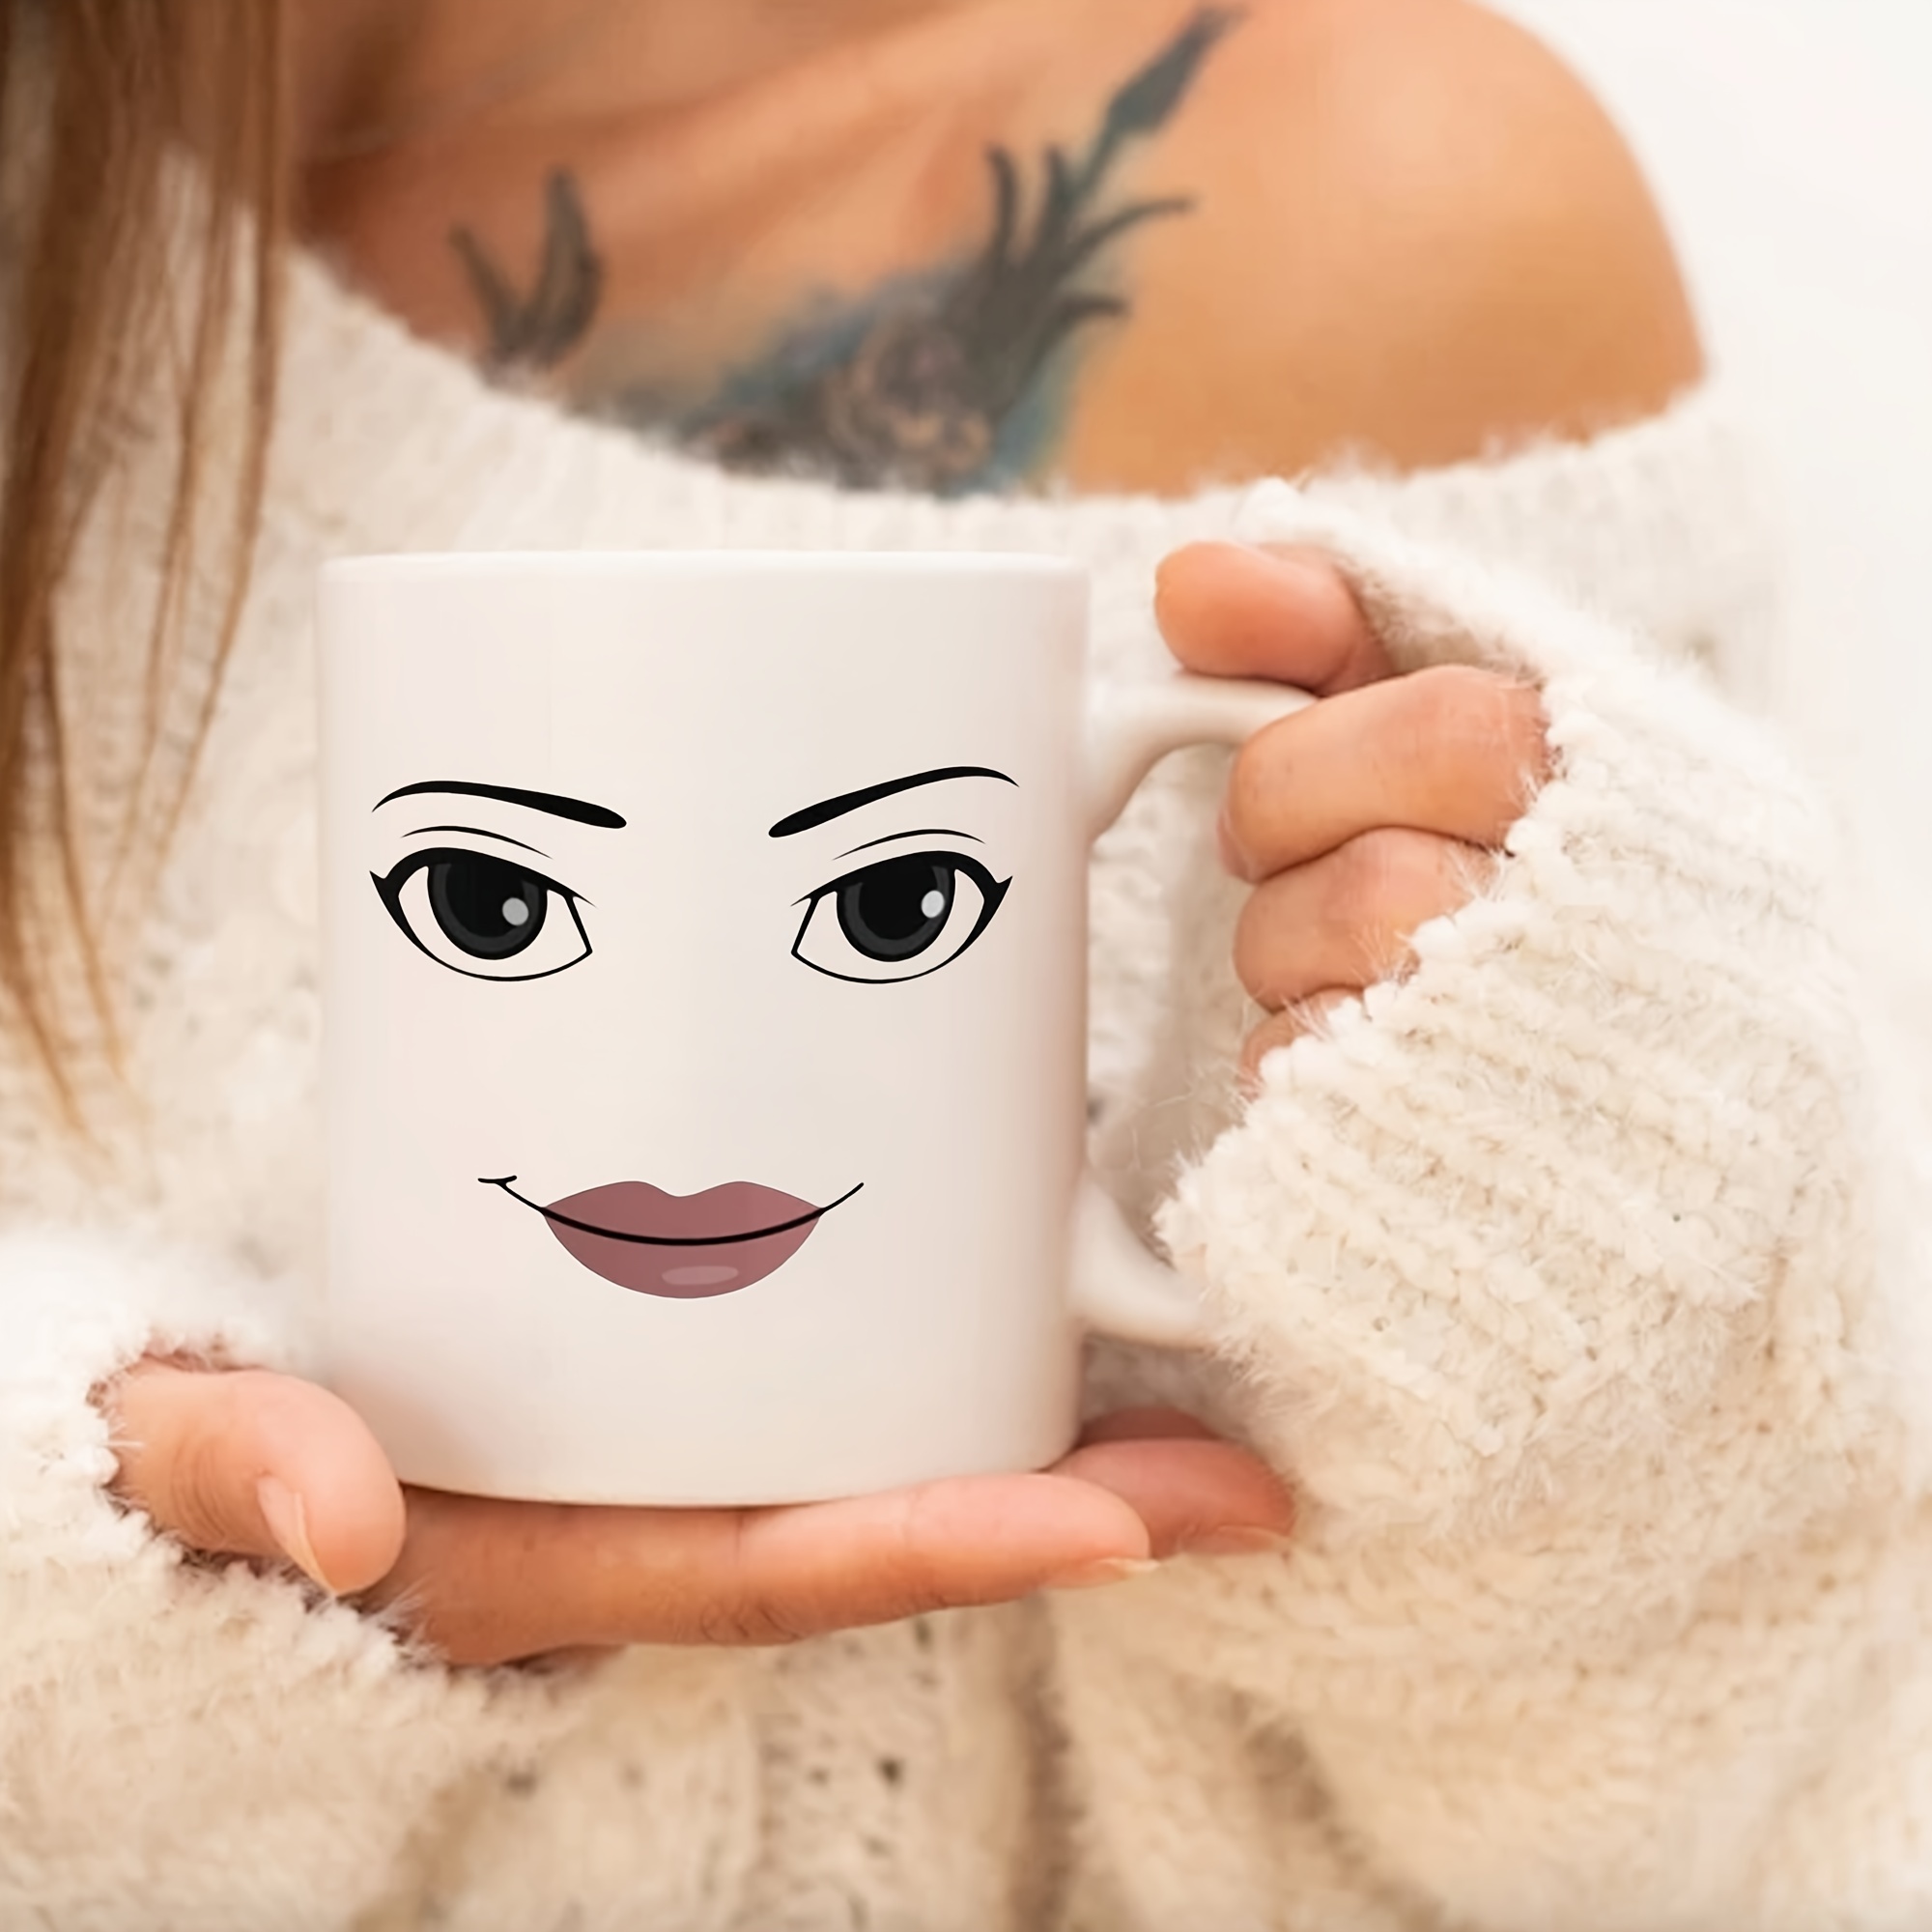 Roblox Woman Face Mug